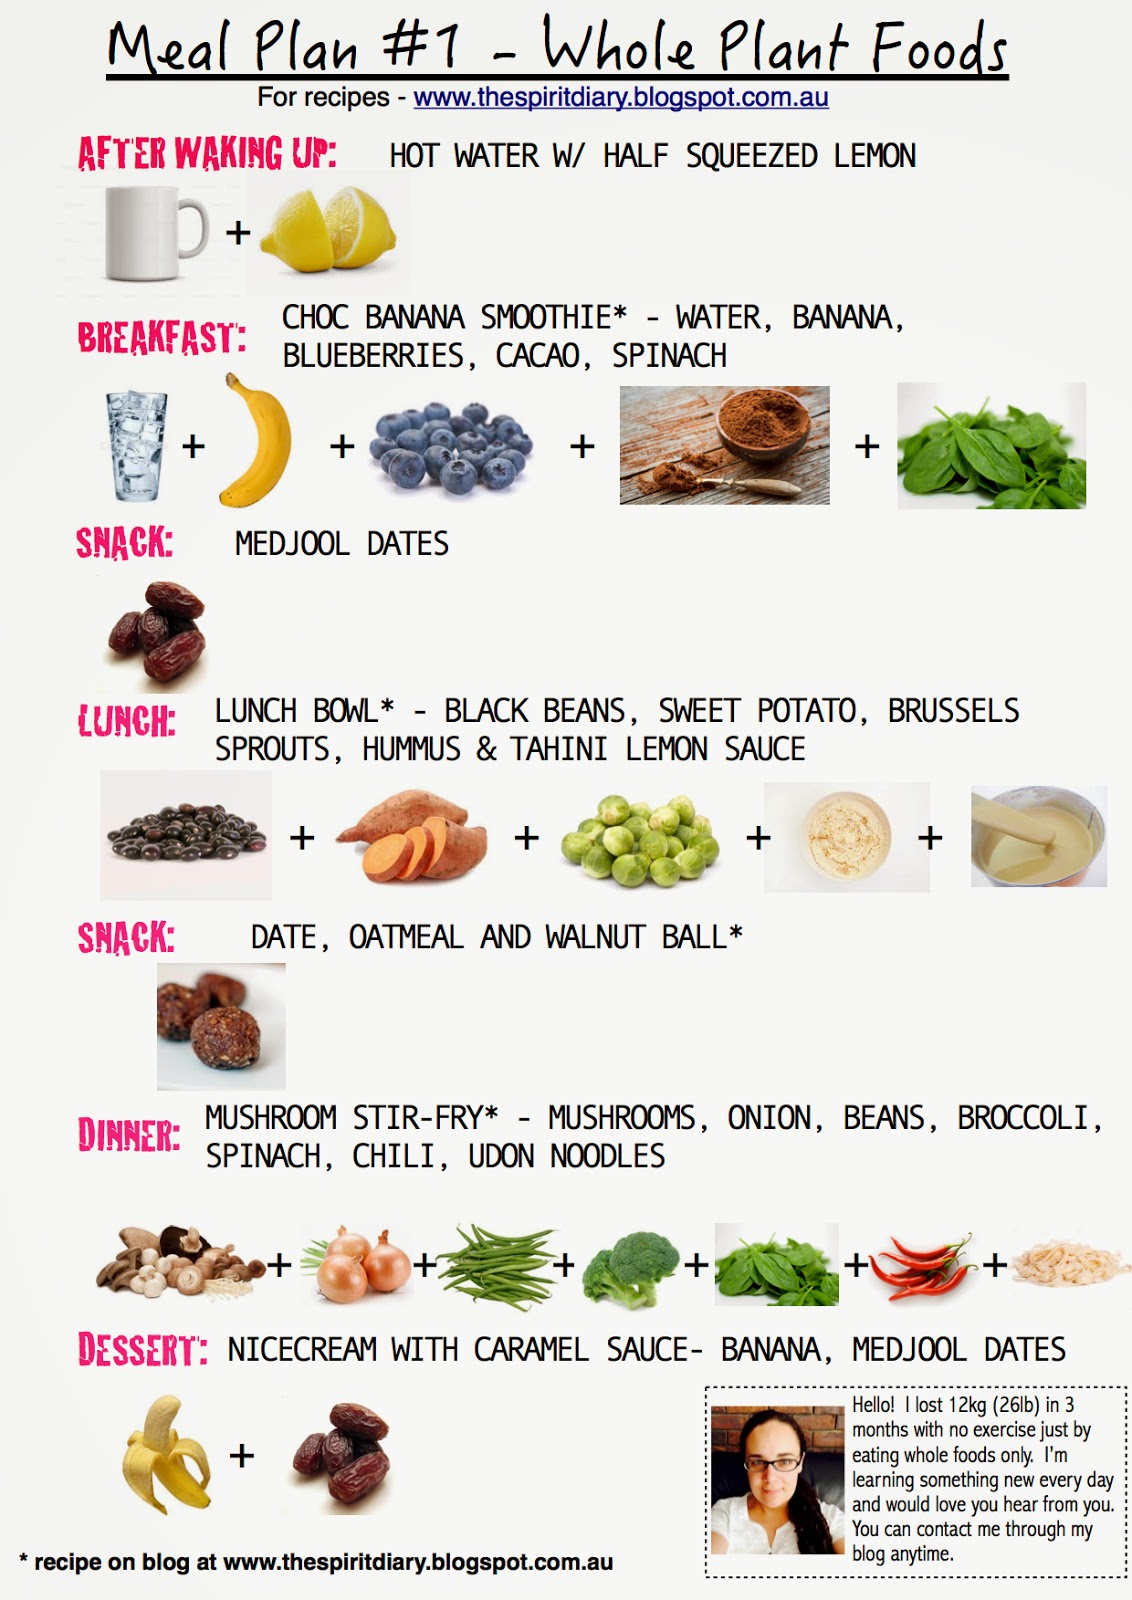 Vegetarian Diet Chart For Women